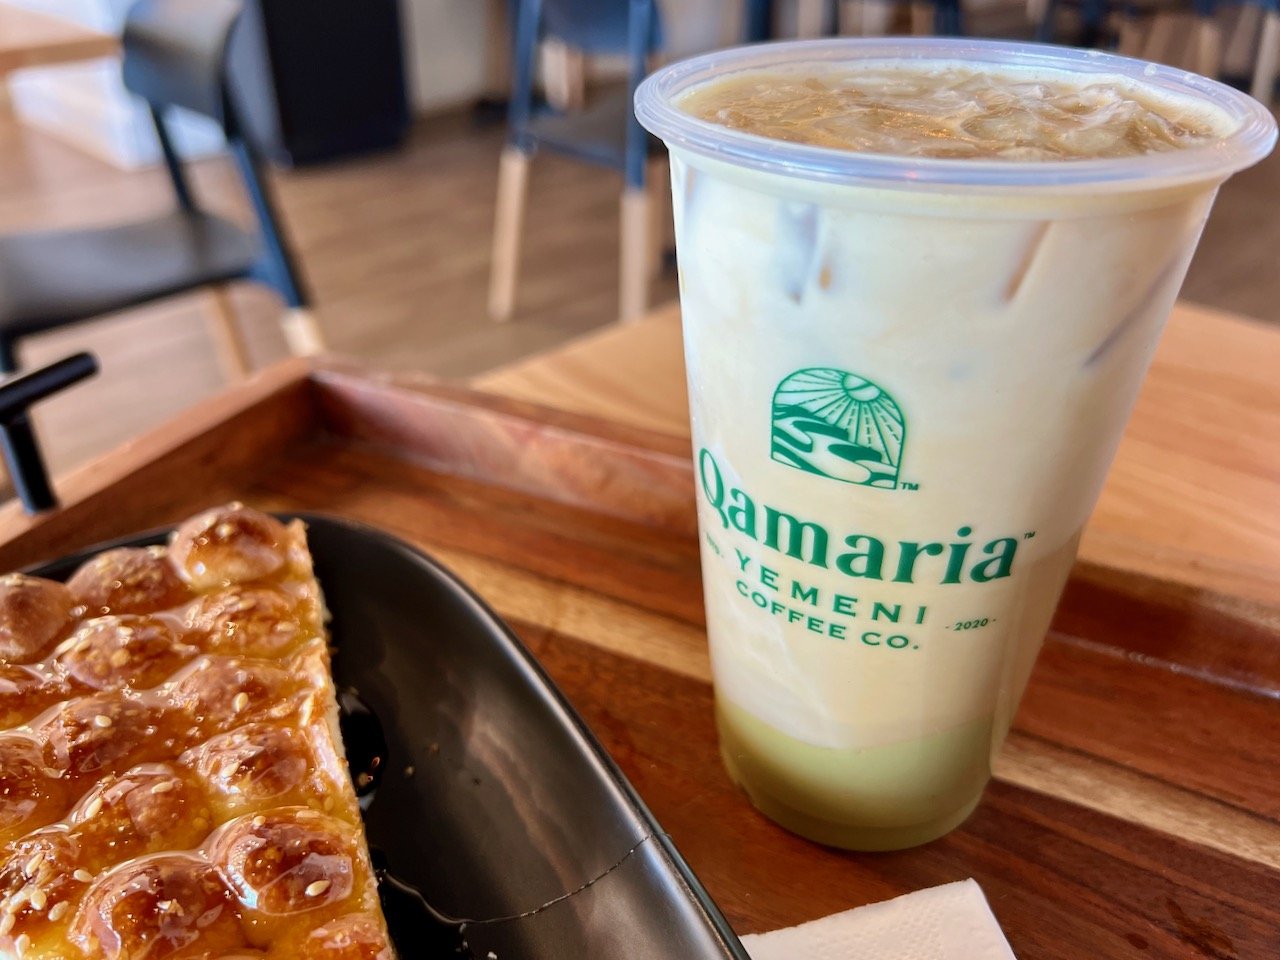 The Qamaria latte at Qamaria Yemeni Coffee Co. in Hilliard